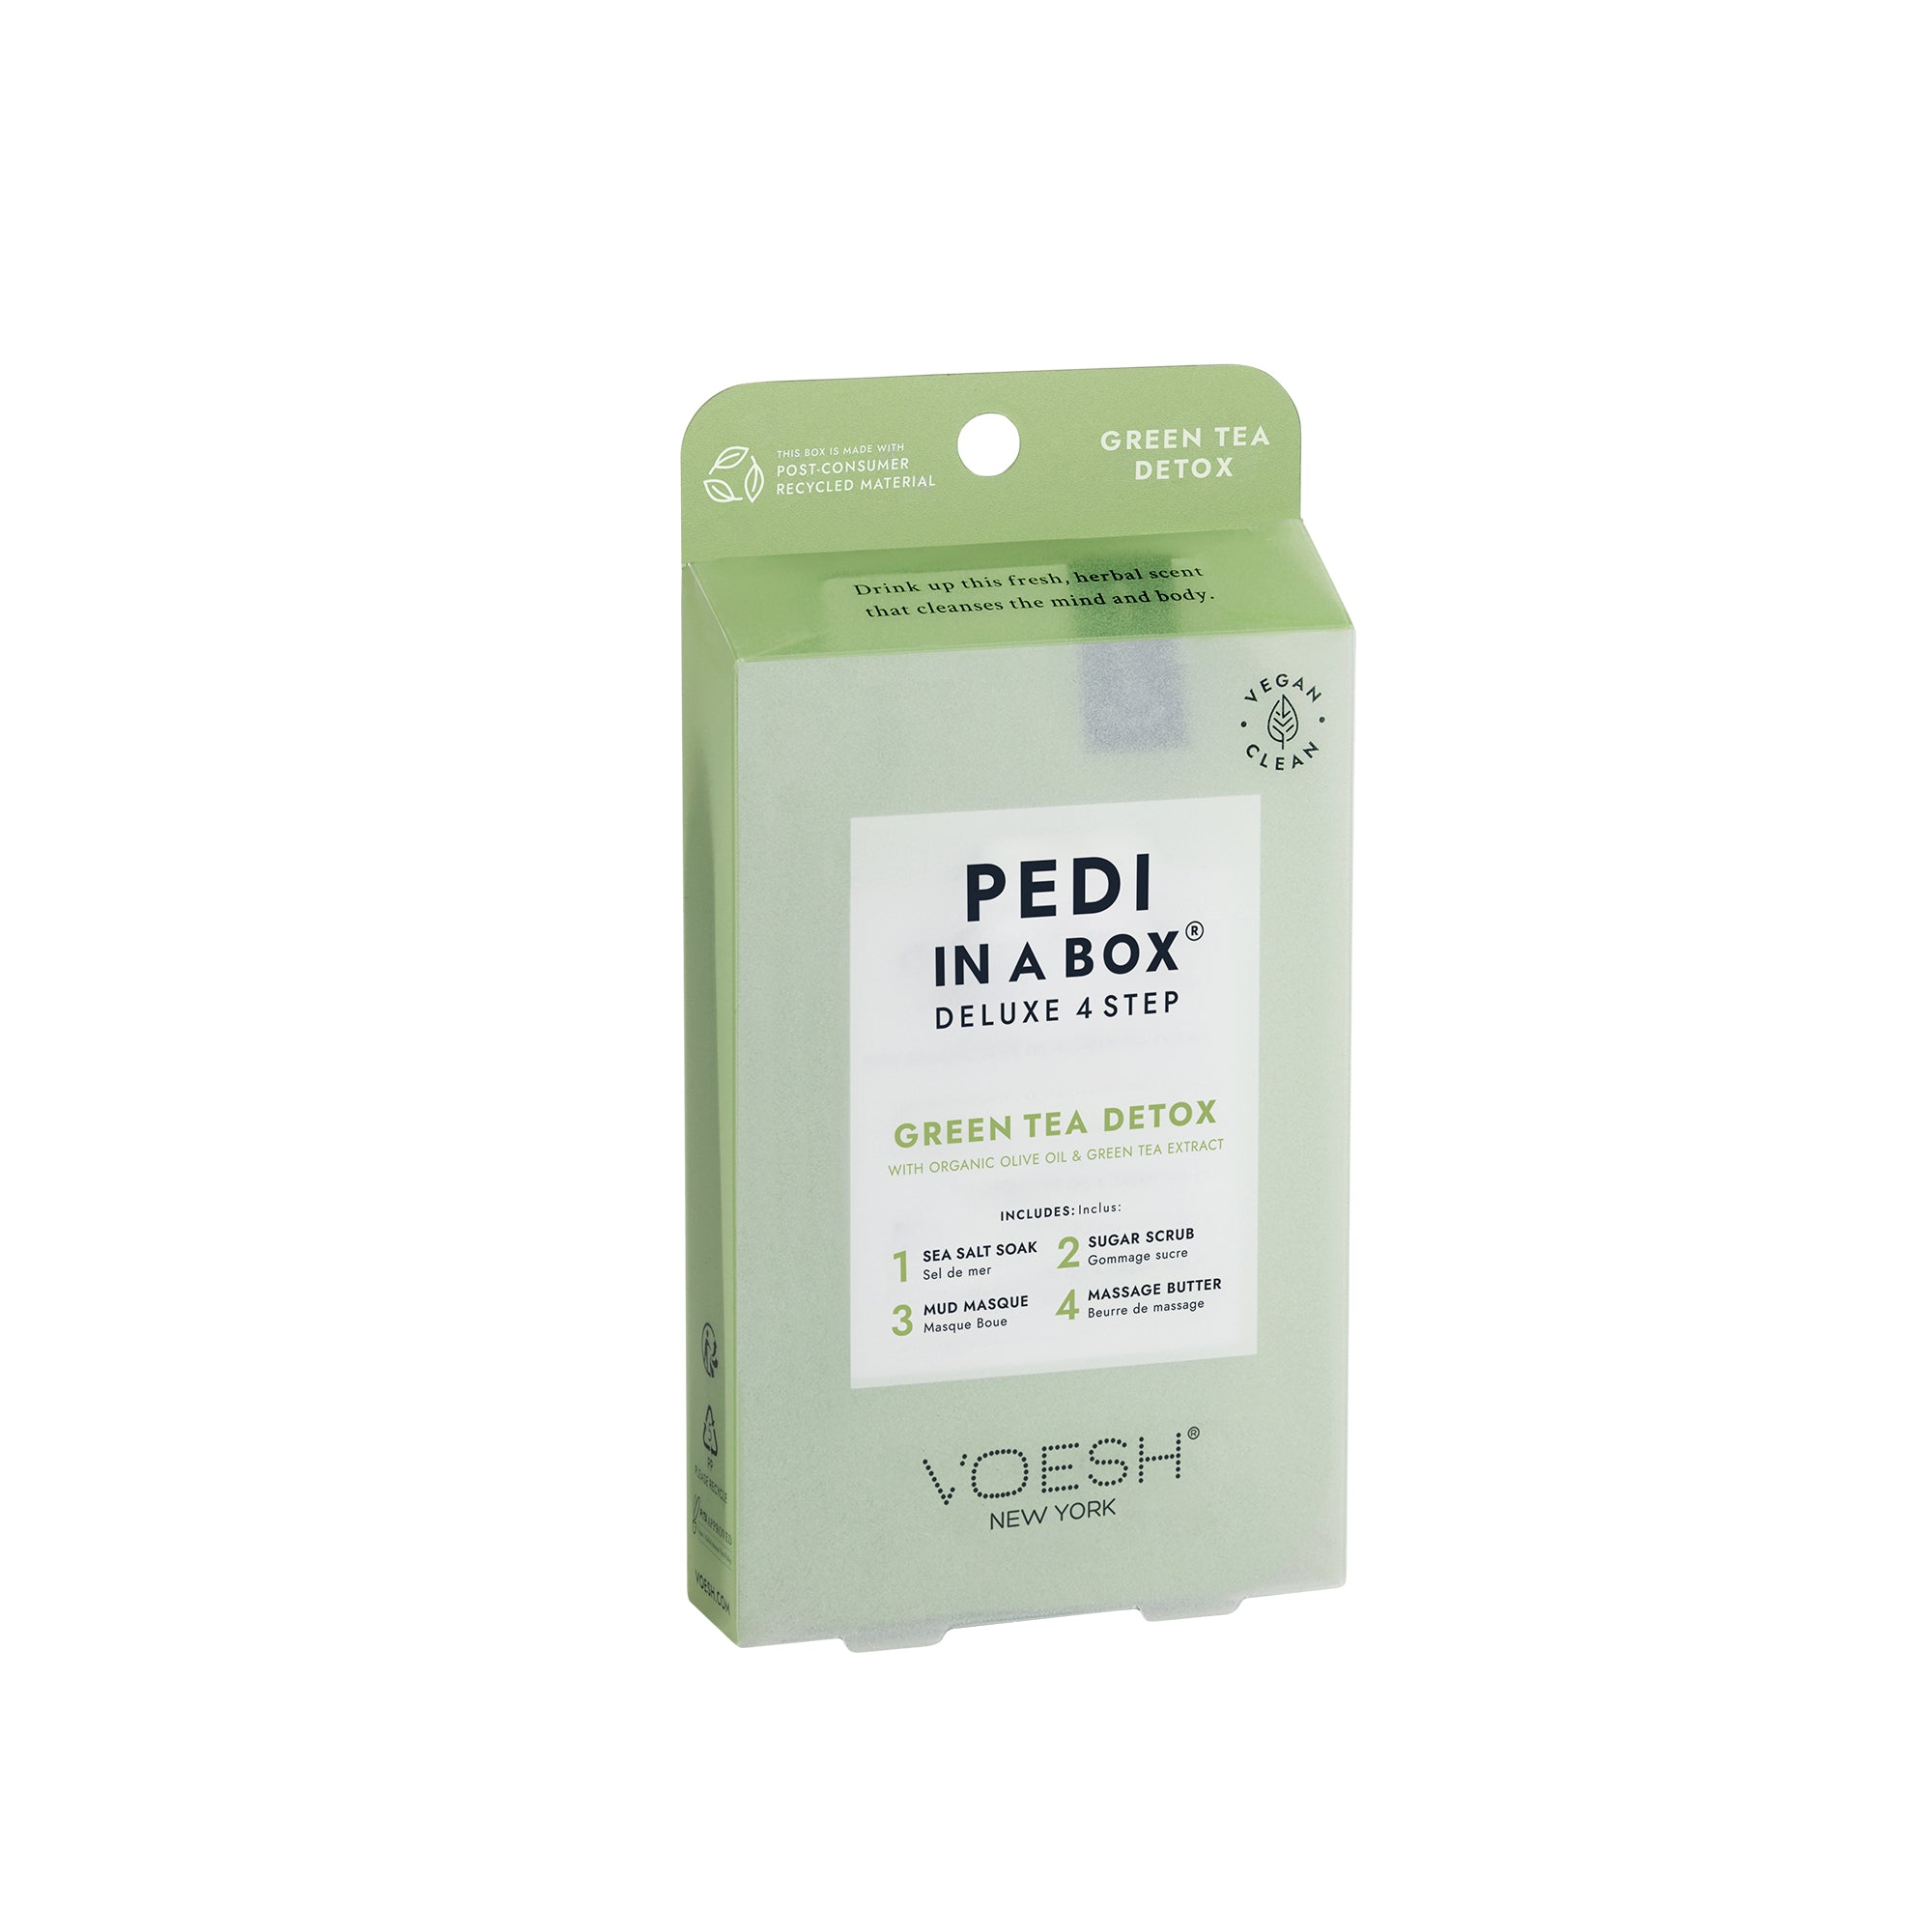 Voesh Deluxe 4 Step Pedi-in-a-Box Green Tea Detox Success